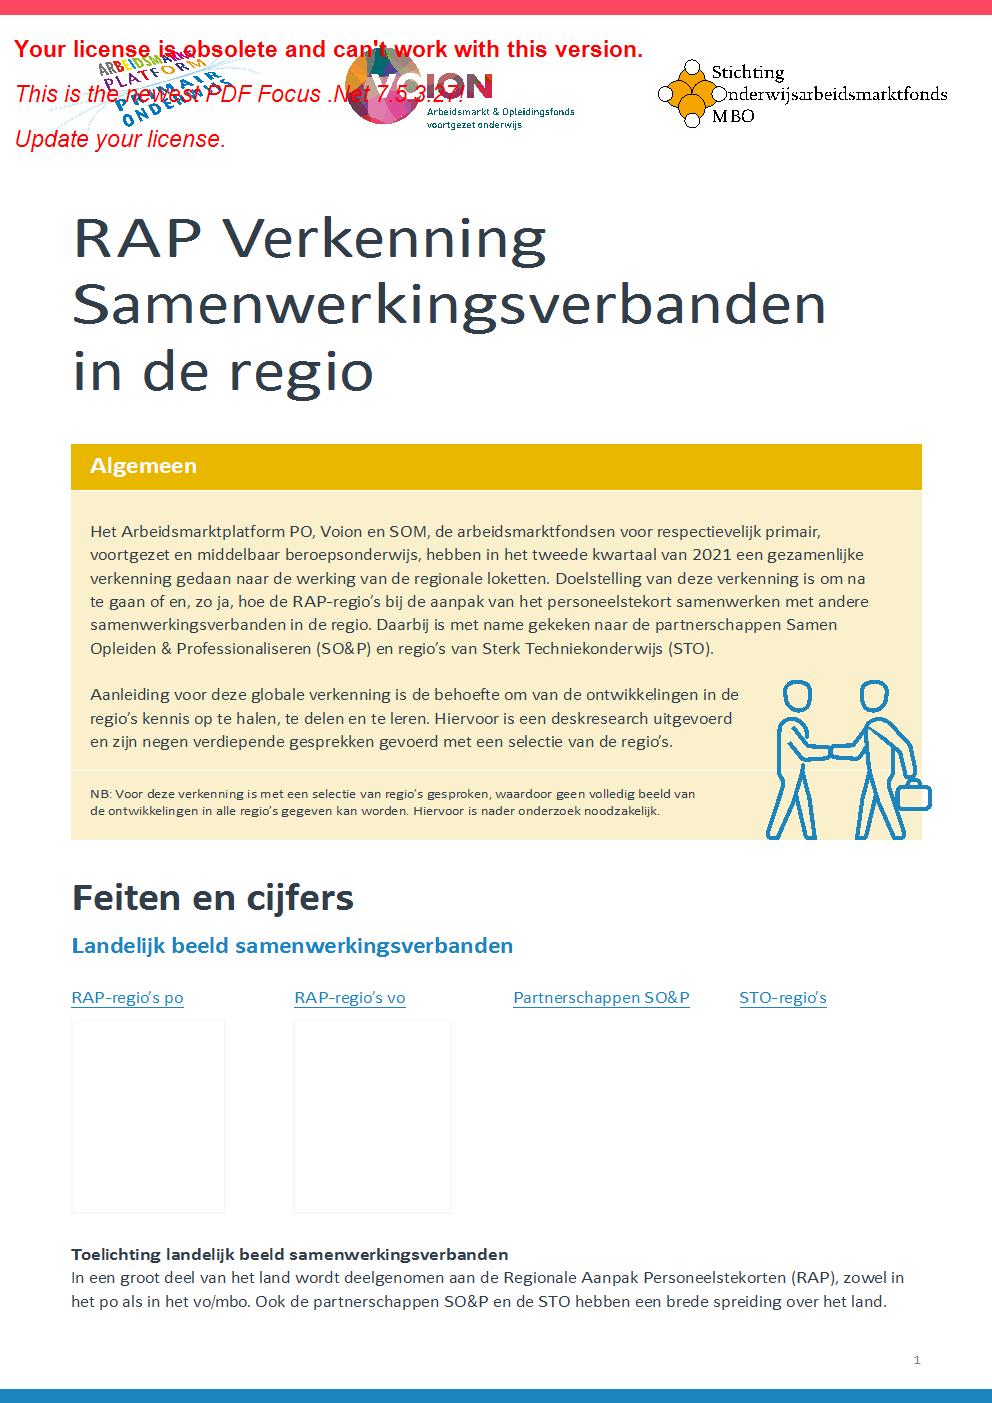 RAP Verkenning Samenwerkingsverbanden in de regio - september 2021